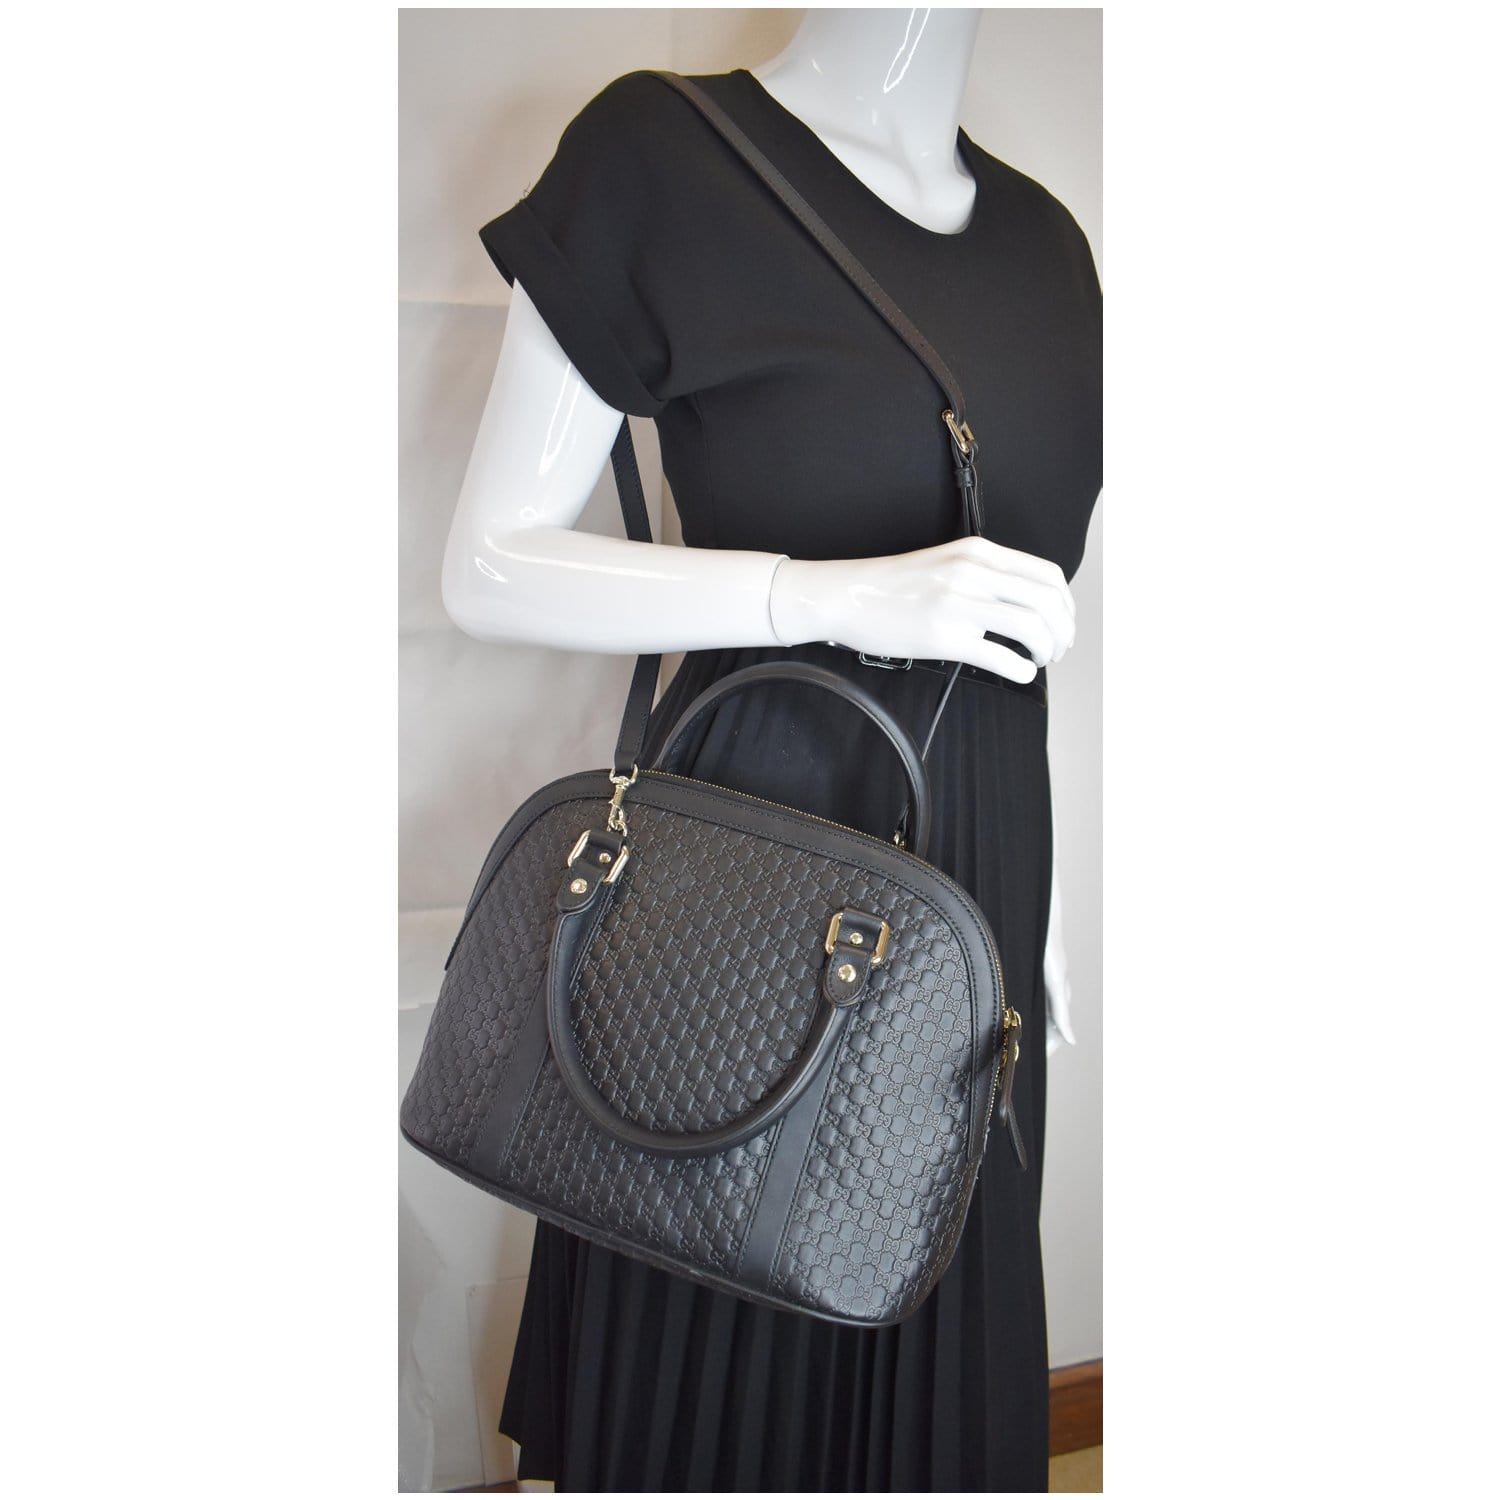 Mcm - Authenticated Handbag - Leather Black Plain for Women, Never Worn